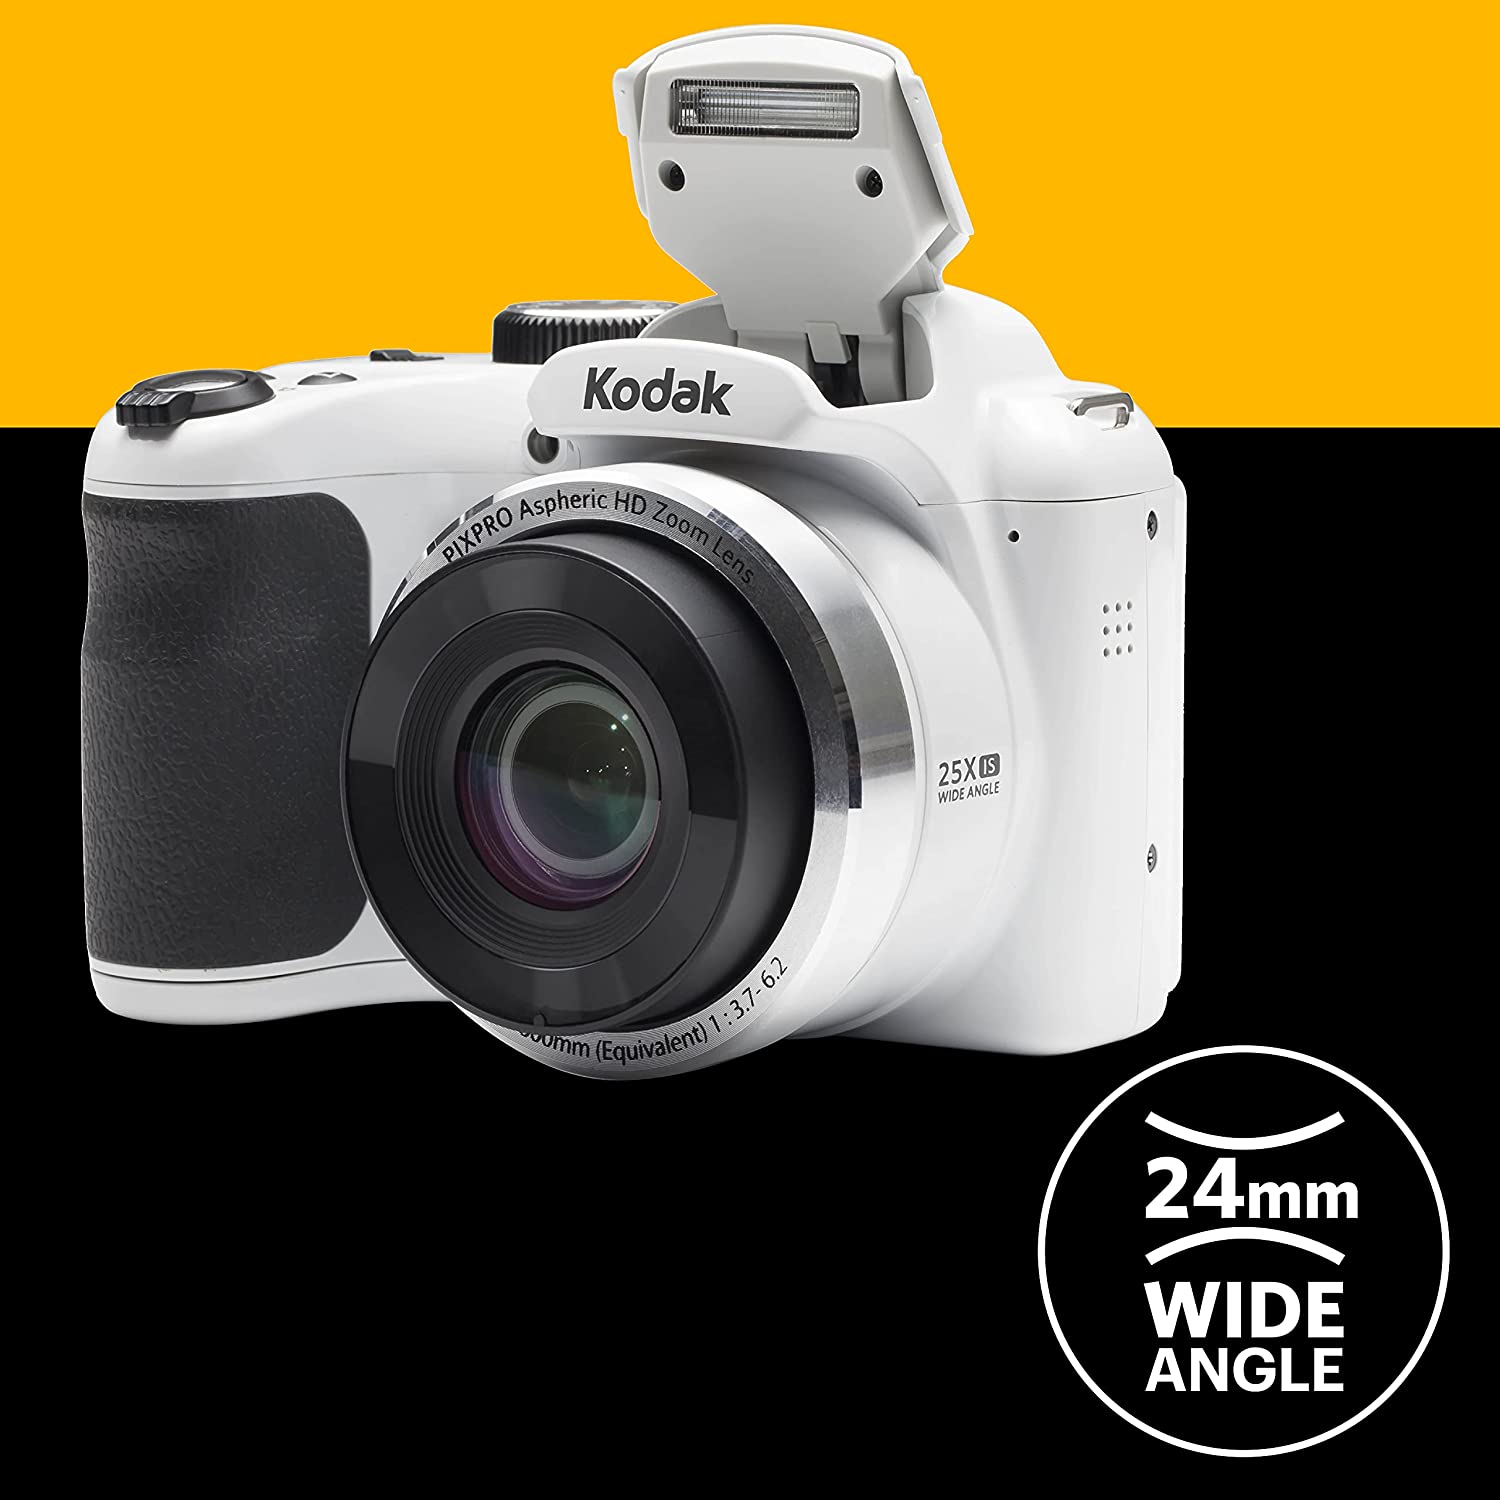 KODAK PIXPRO AZ252 Reflex Astro Zoom Bridge Camera 16MP, 3-inch LCD and 25X optical Zoom with Optical Image Stabilizer